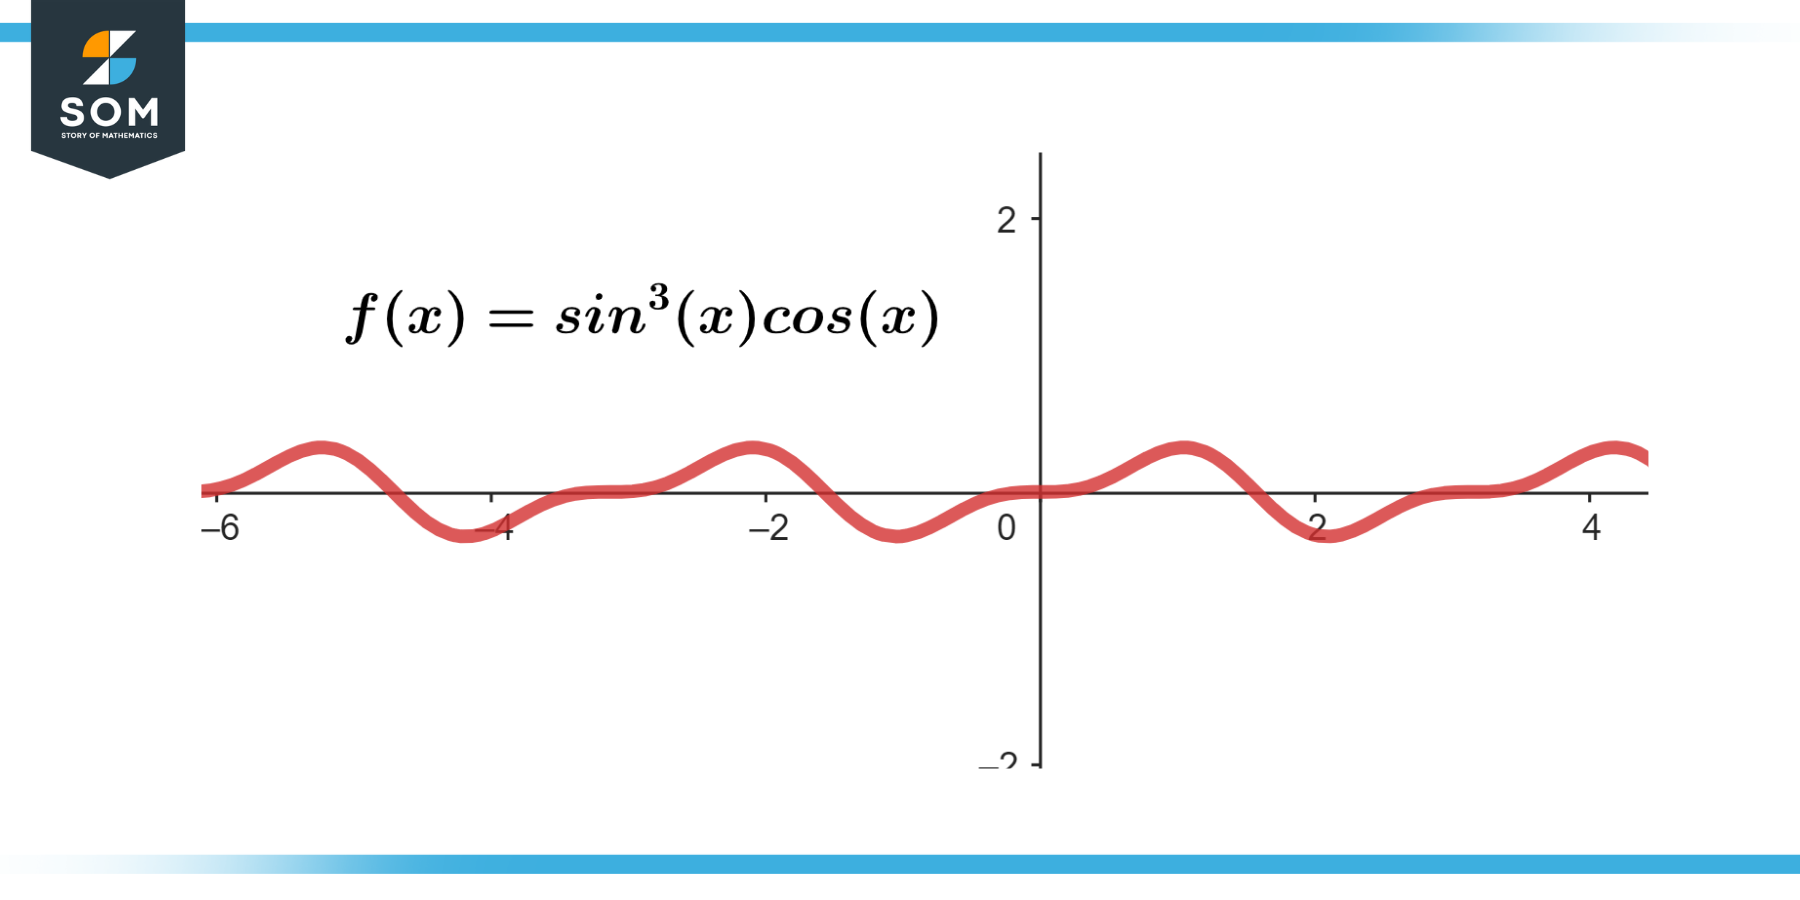 Graphica representation of a function fx equlas sin cube x times cos